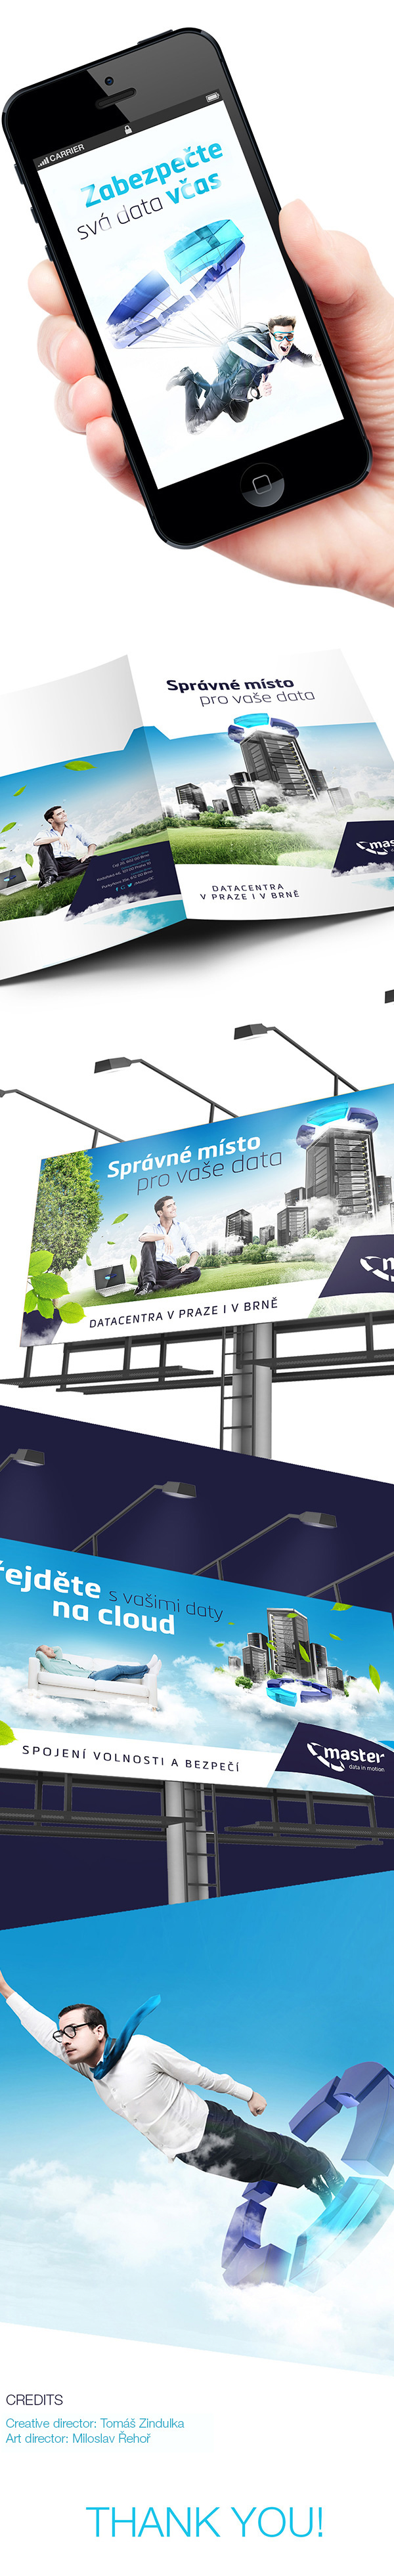 cloud datacentre corporate style identity billboard Web design SKY blue Responsive superman